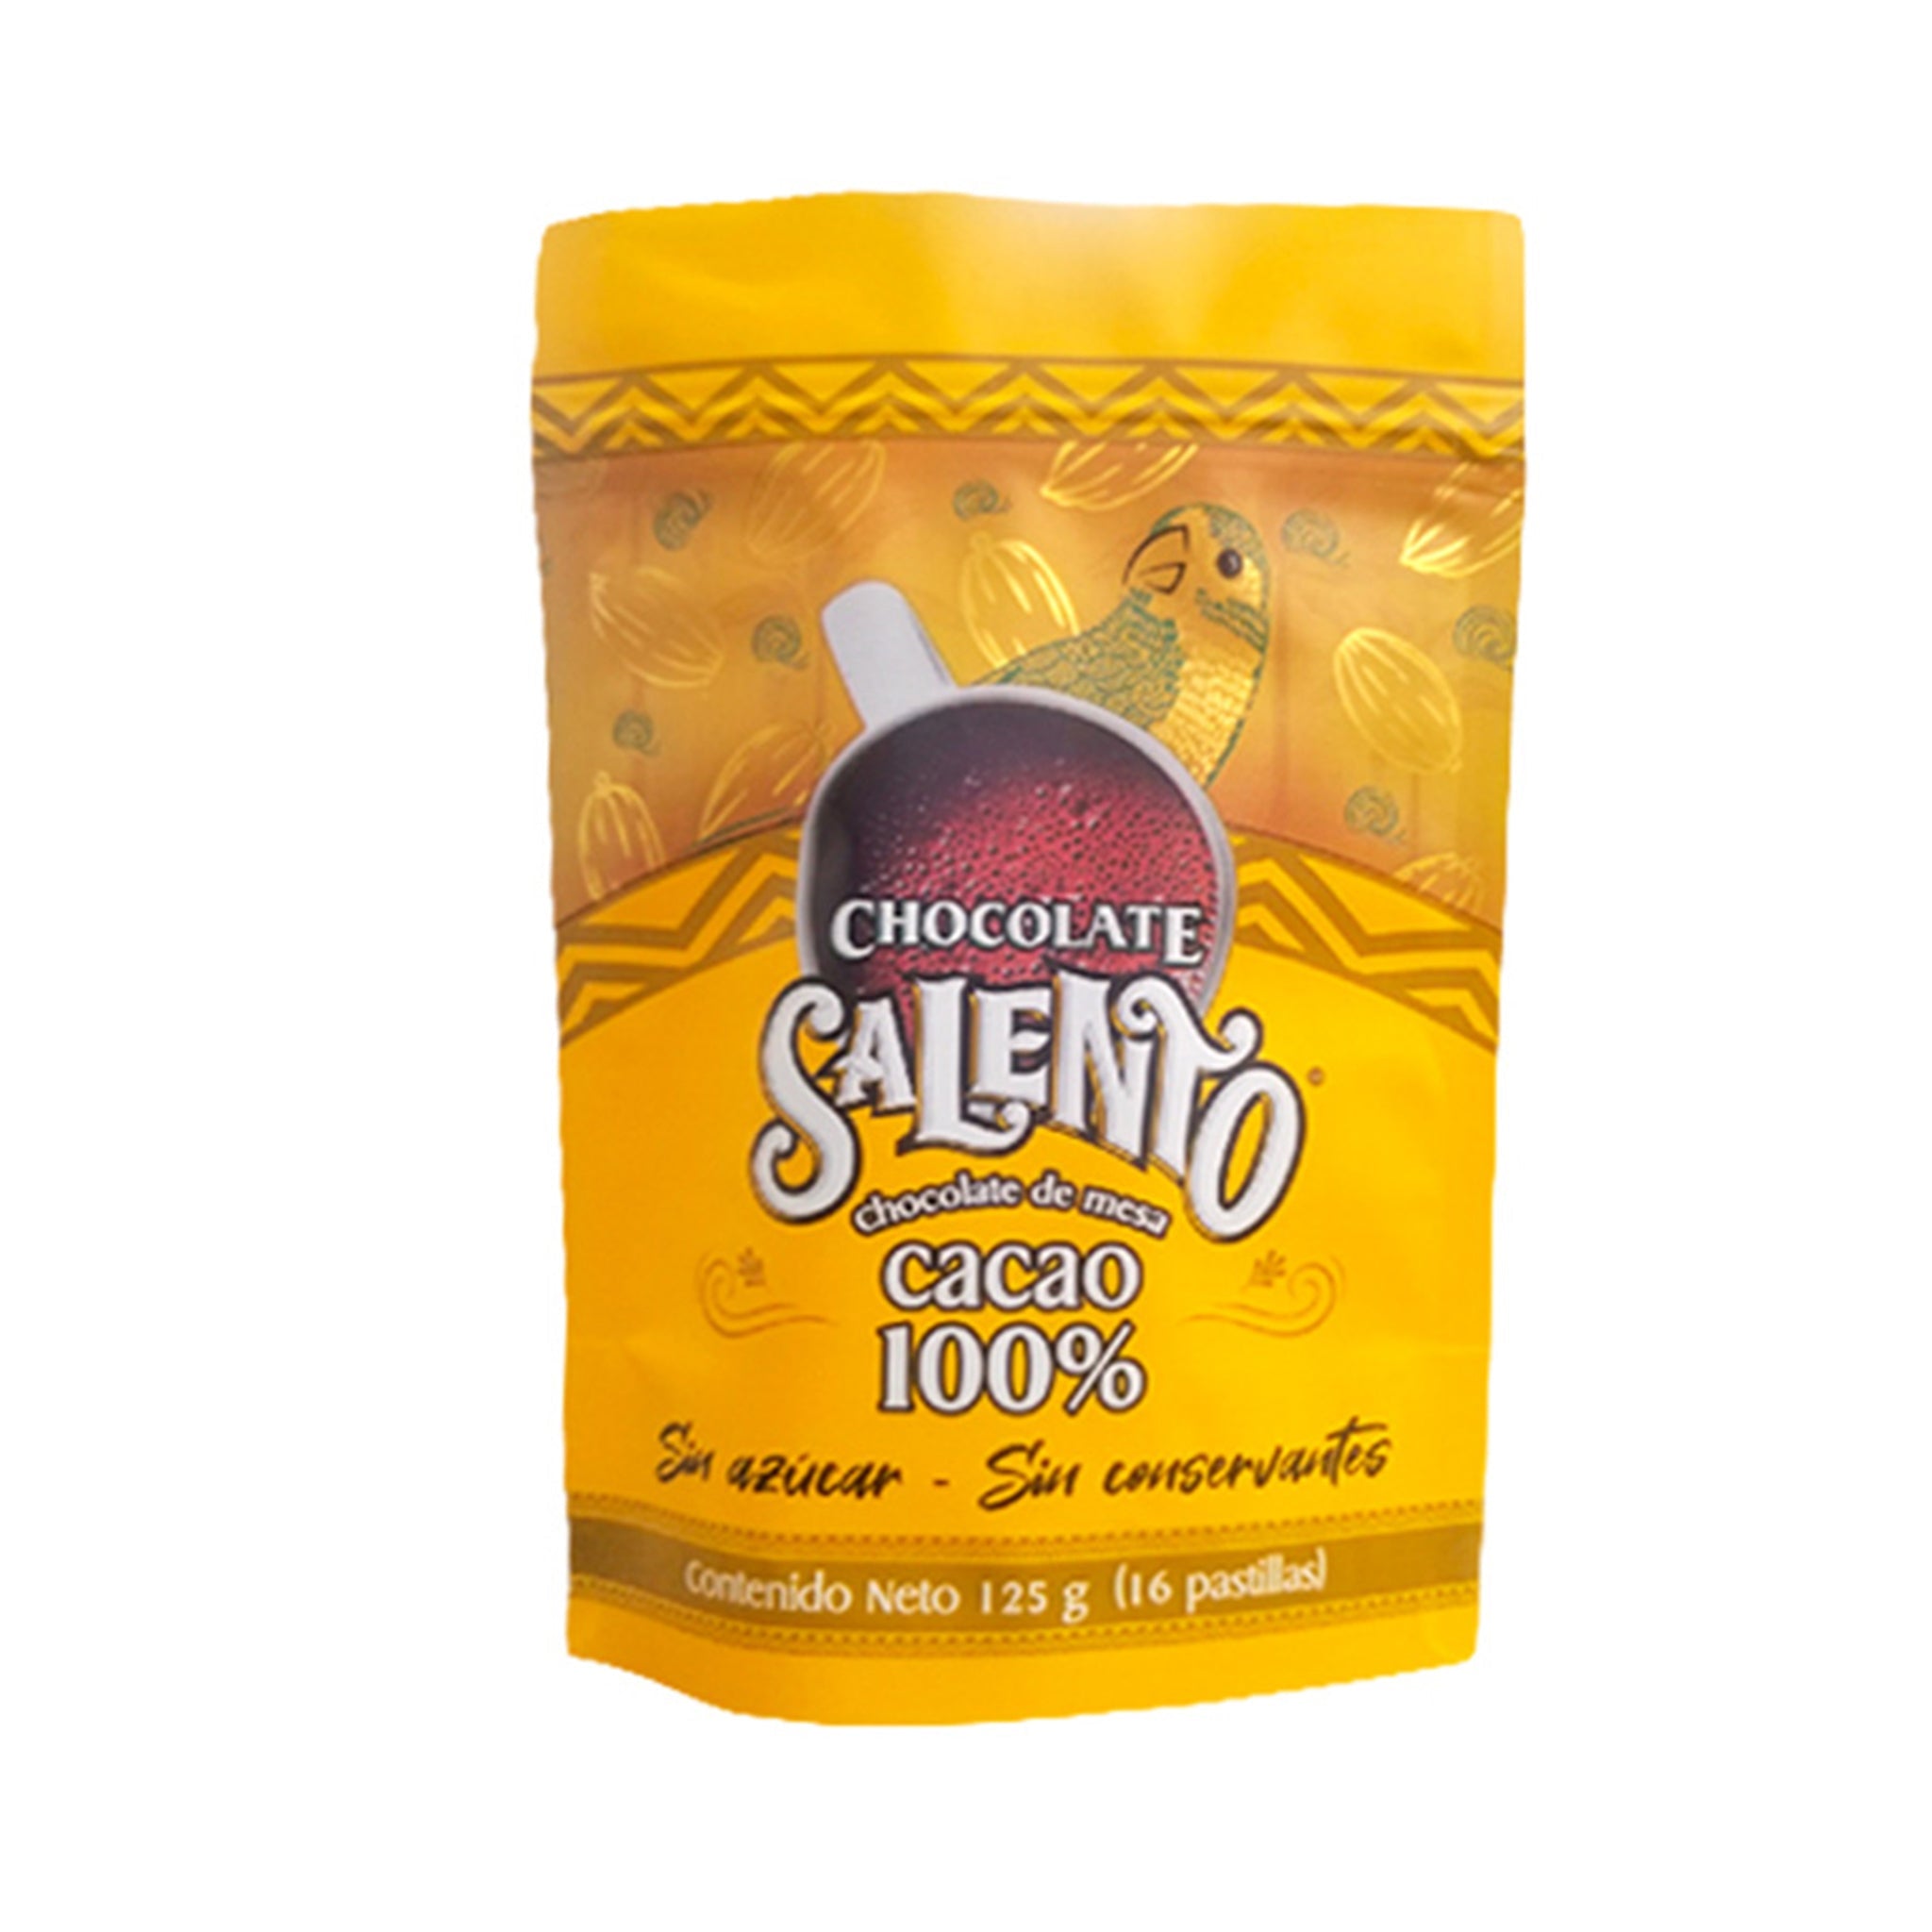 Chocolate Salento - Cacao 100% - Colombian Coffee